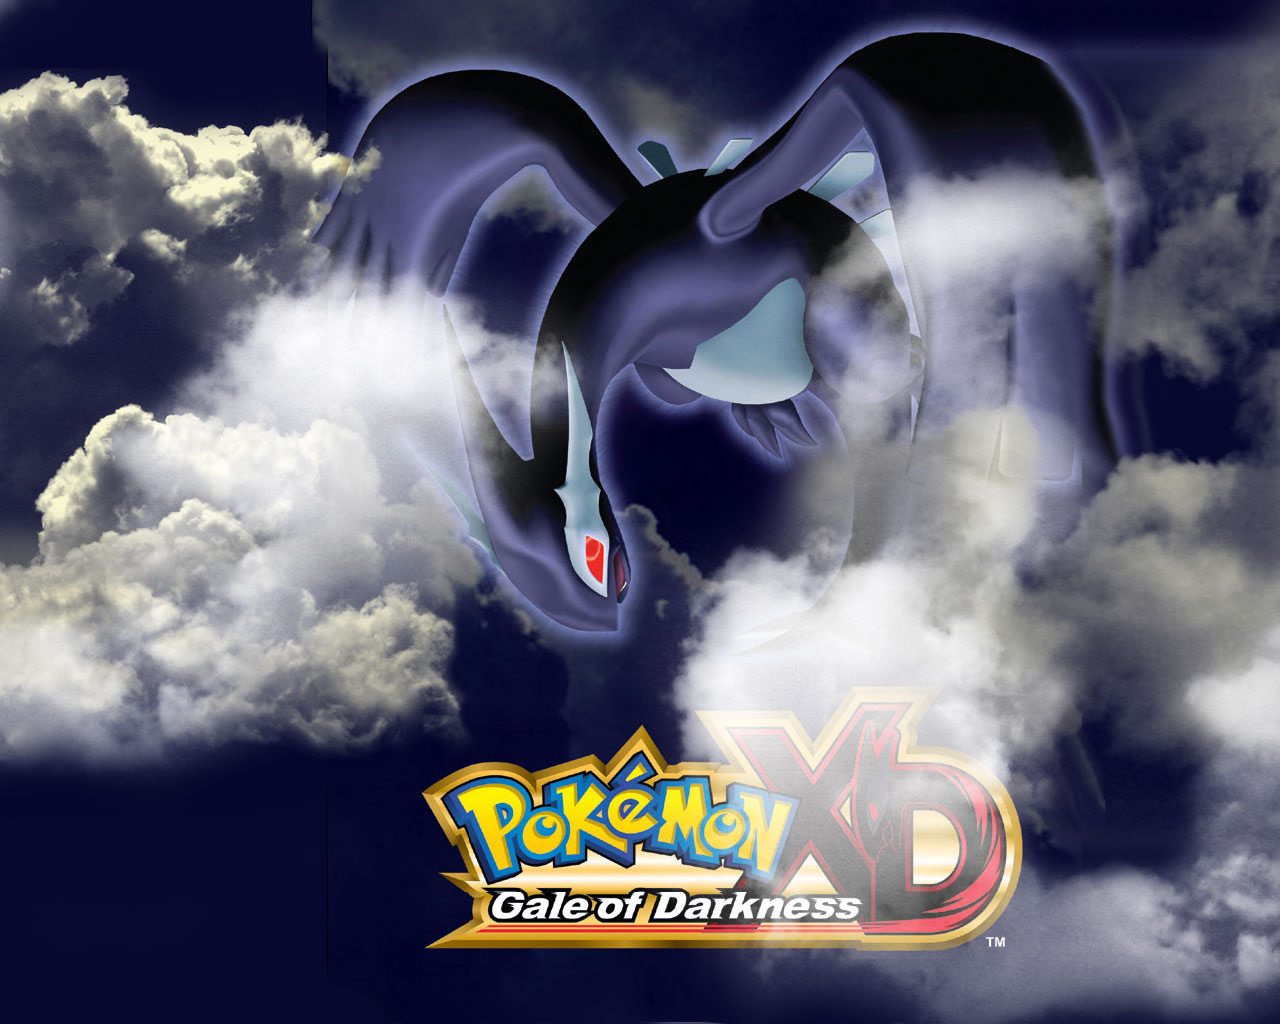 66289-Pokemon_XD_Gale_of_Darkness-1.jpg